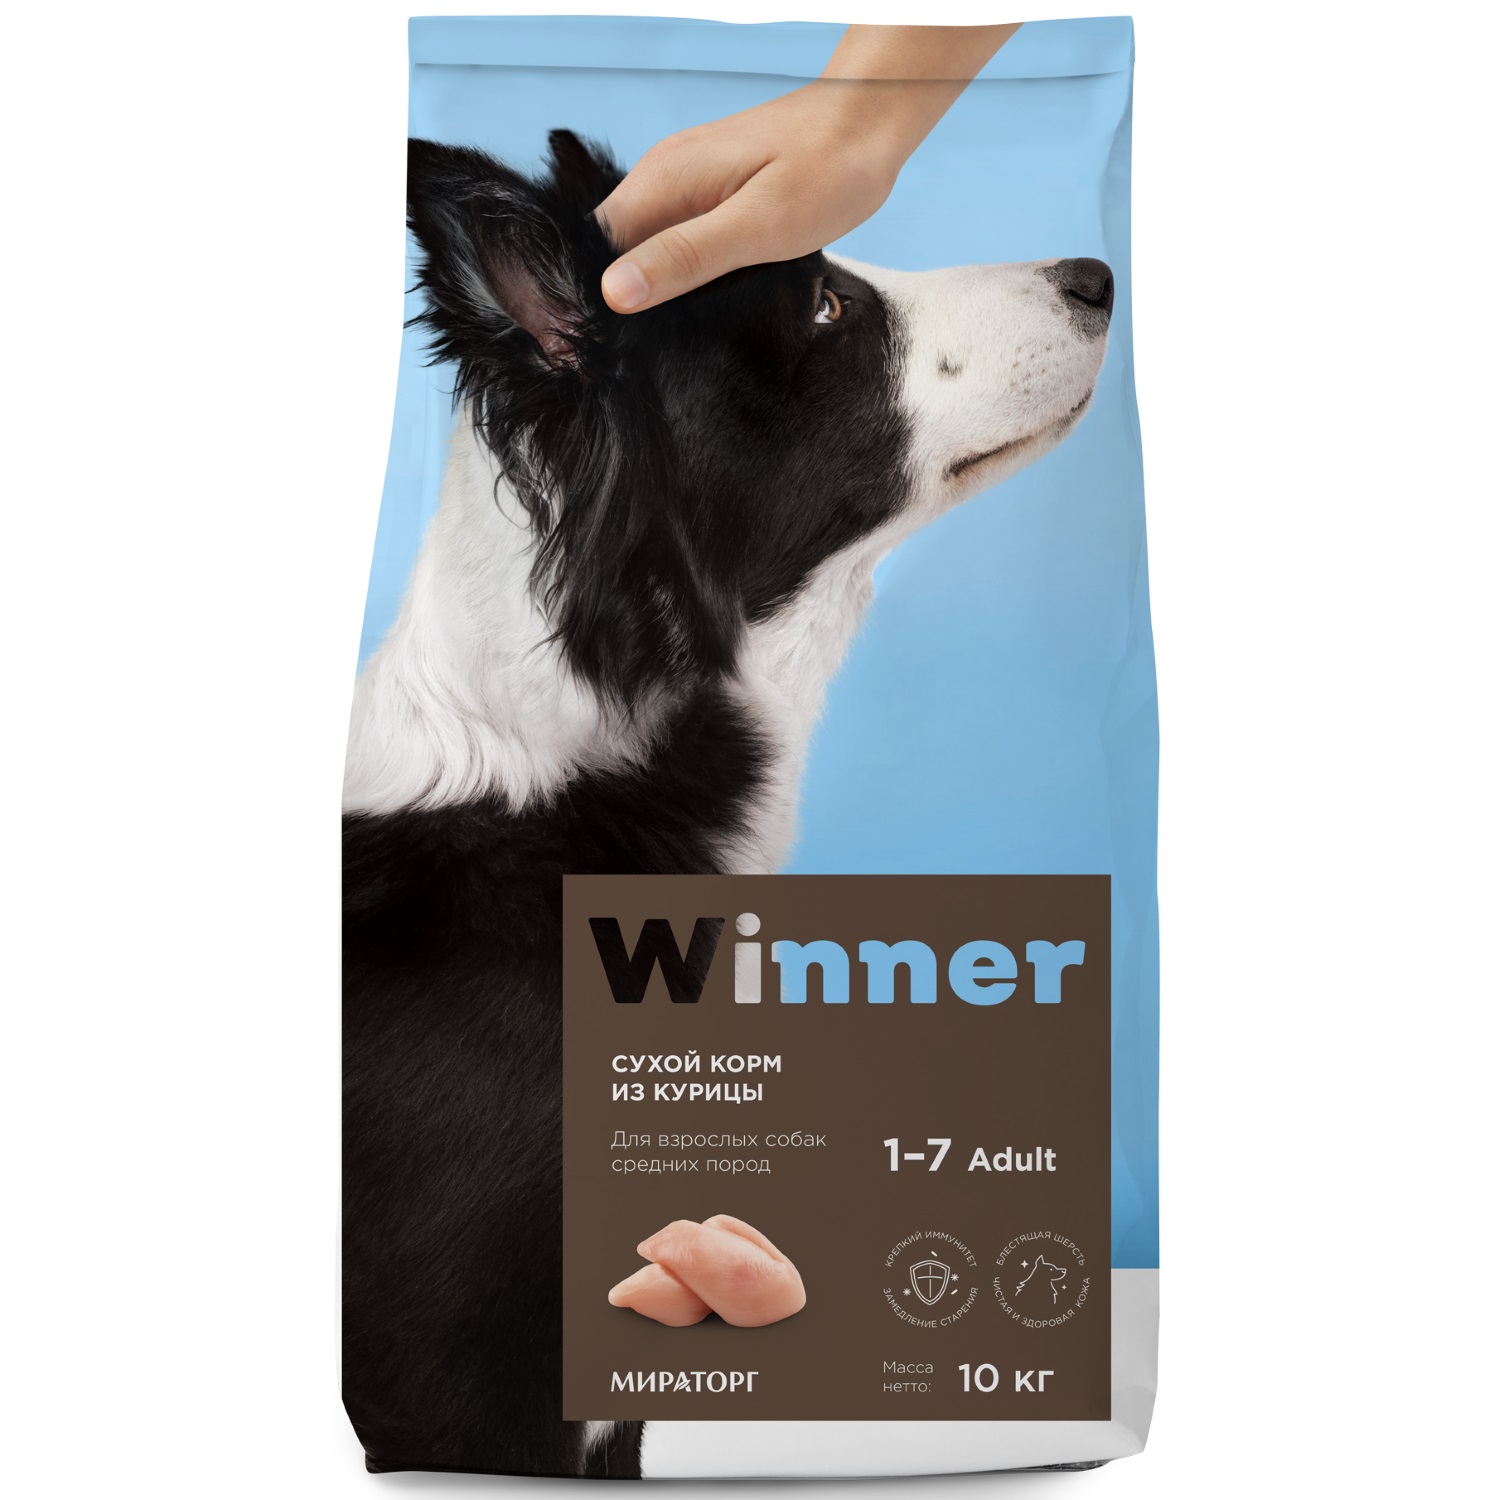 фото Сухой корм для взрослых собак средних пород winner, с курицей, 10 кг